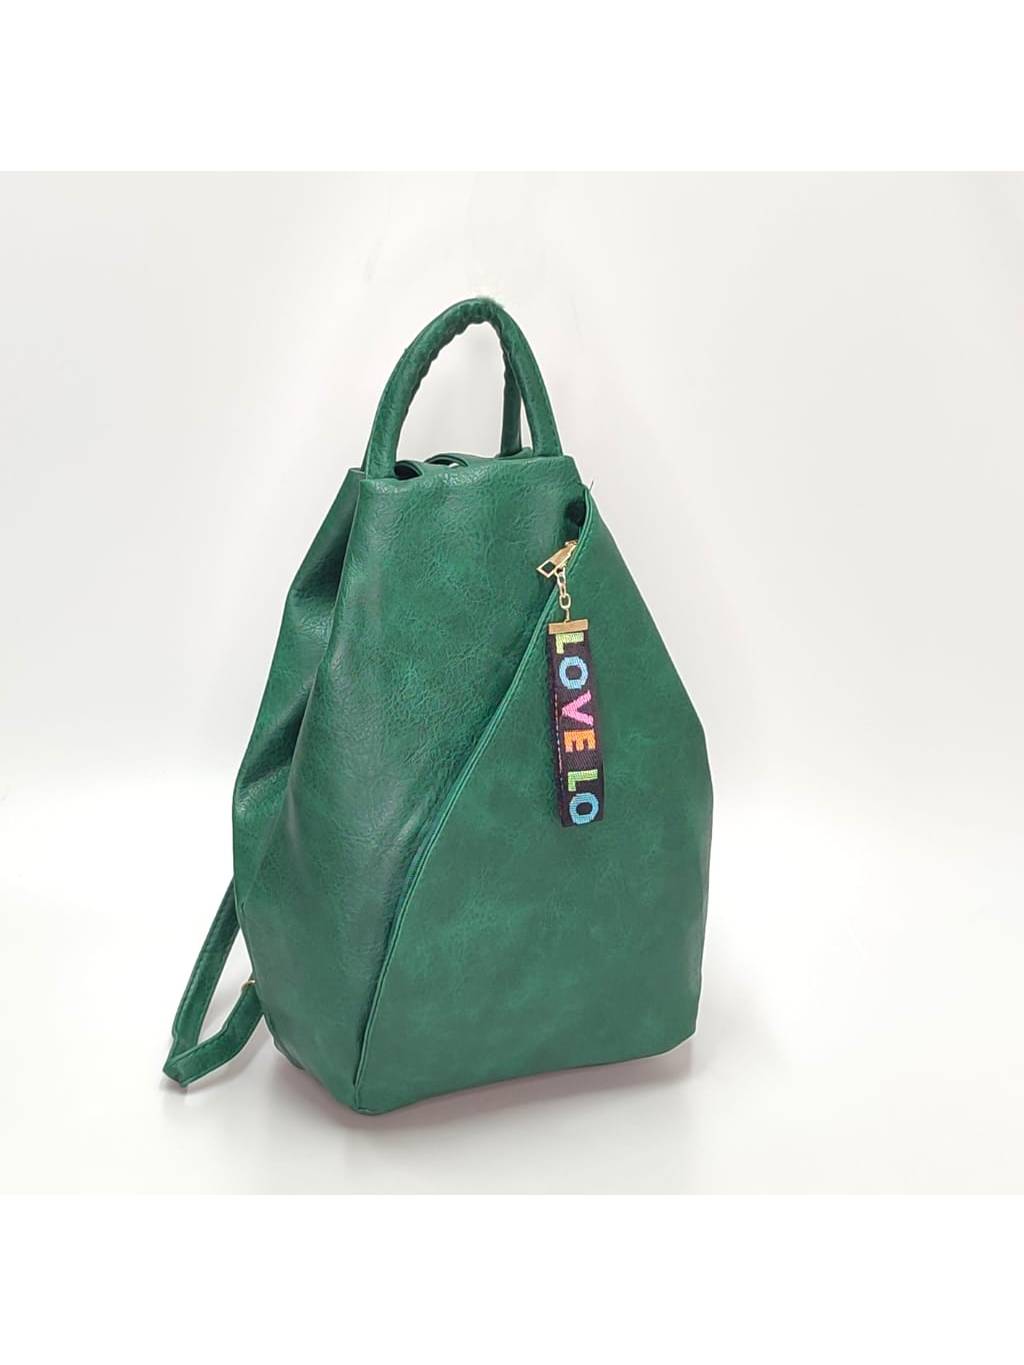 Dámsky ruksak 81261 zelený www.kabelky vypredaj (3)